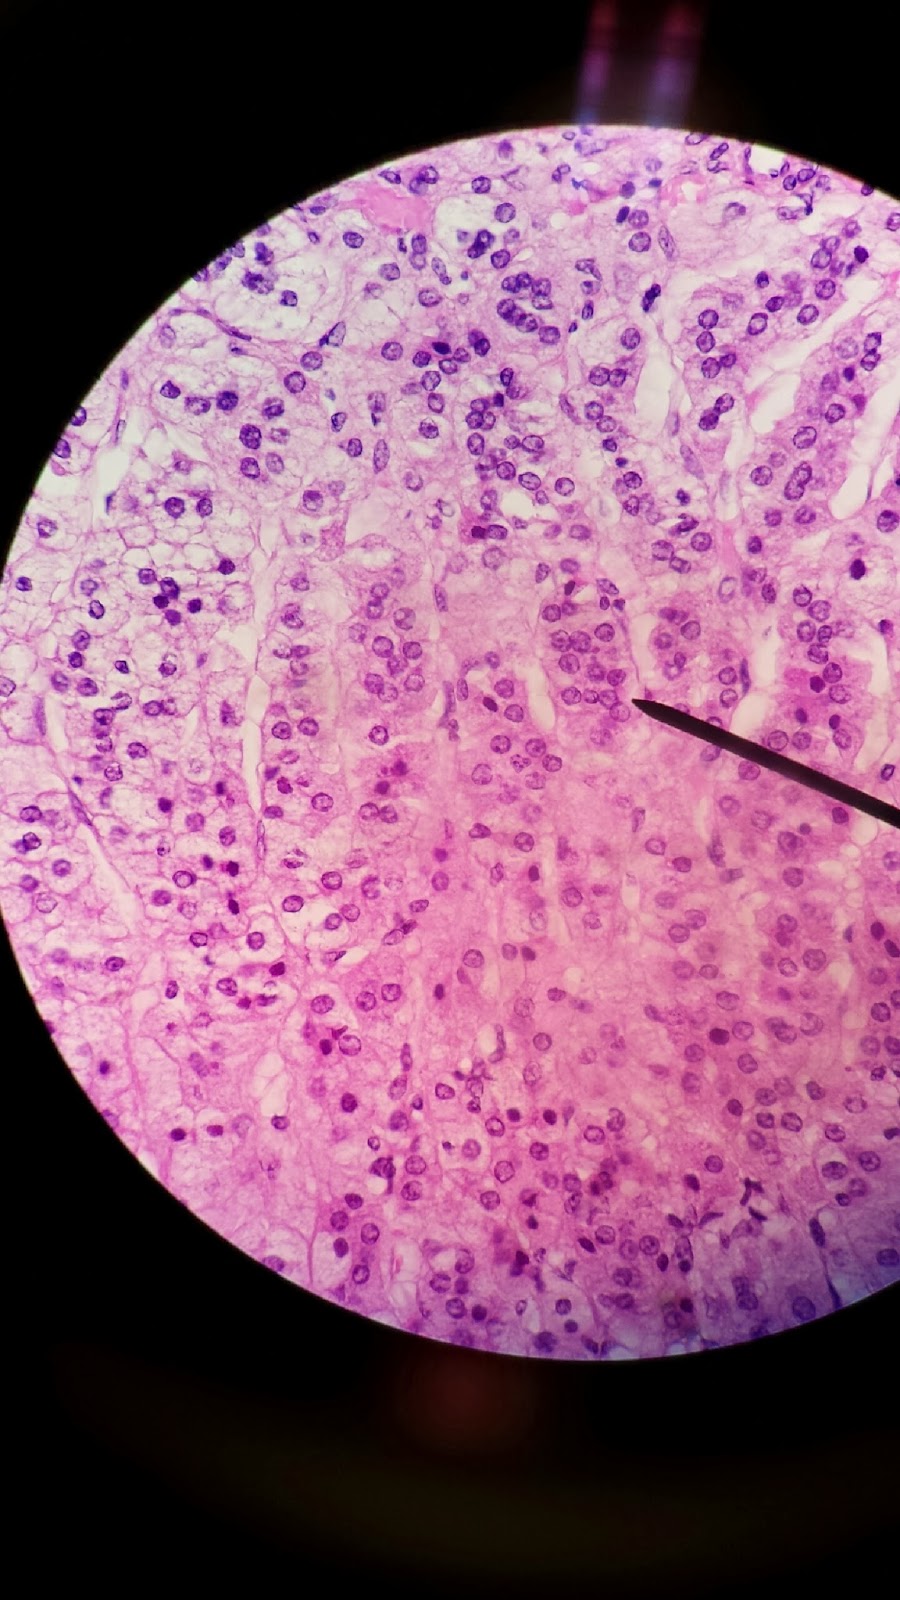 Histology: Adrenal Gland